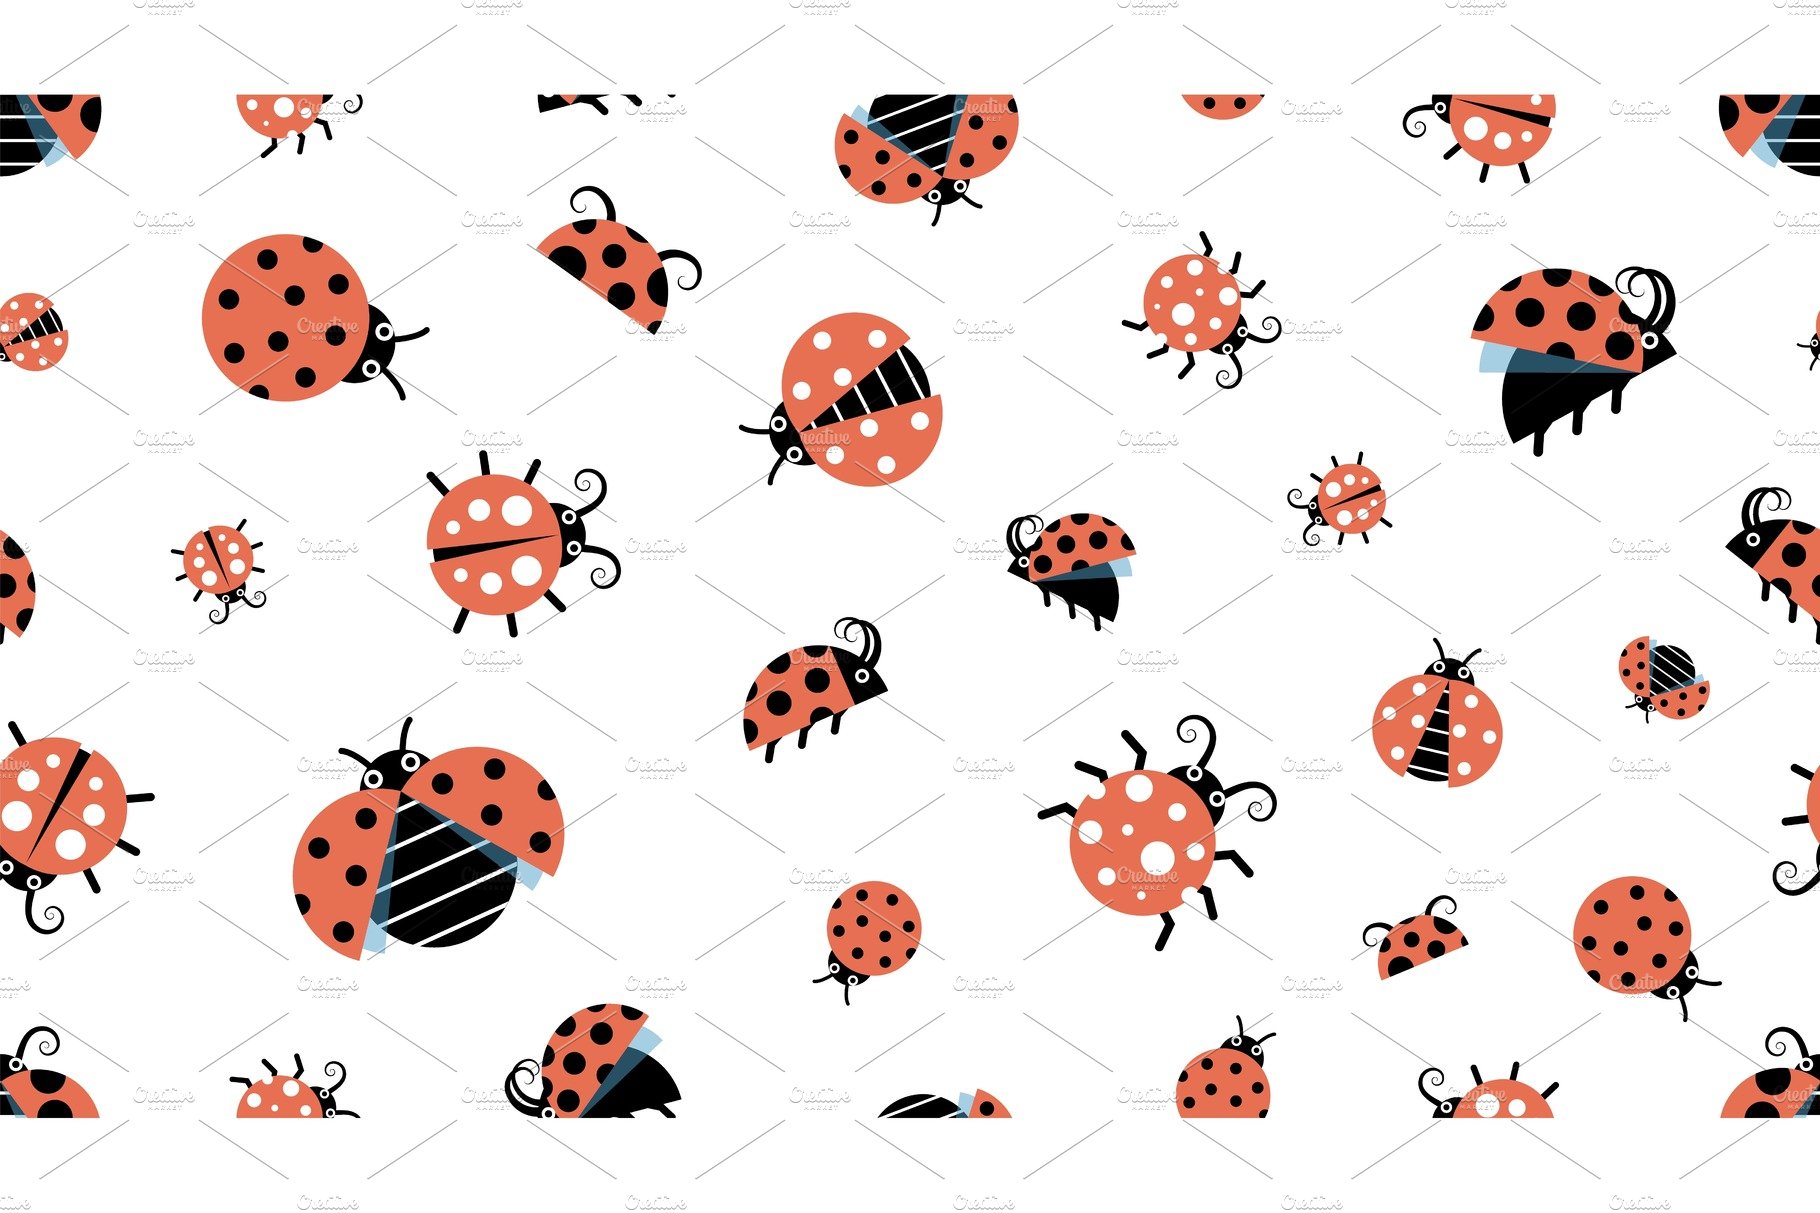 Free Vector  Flat design creative ladybug pattern